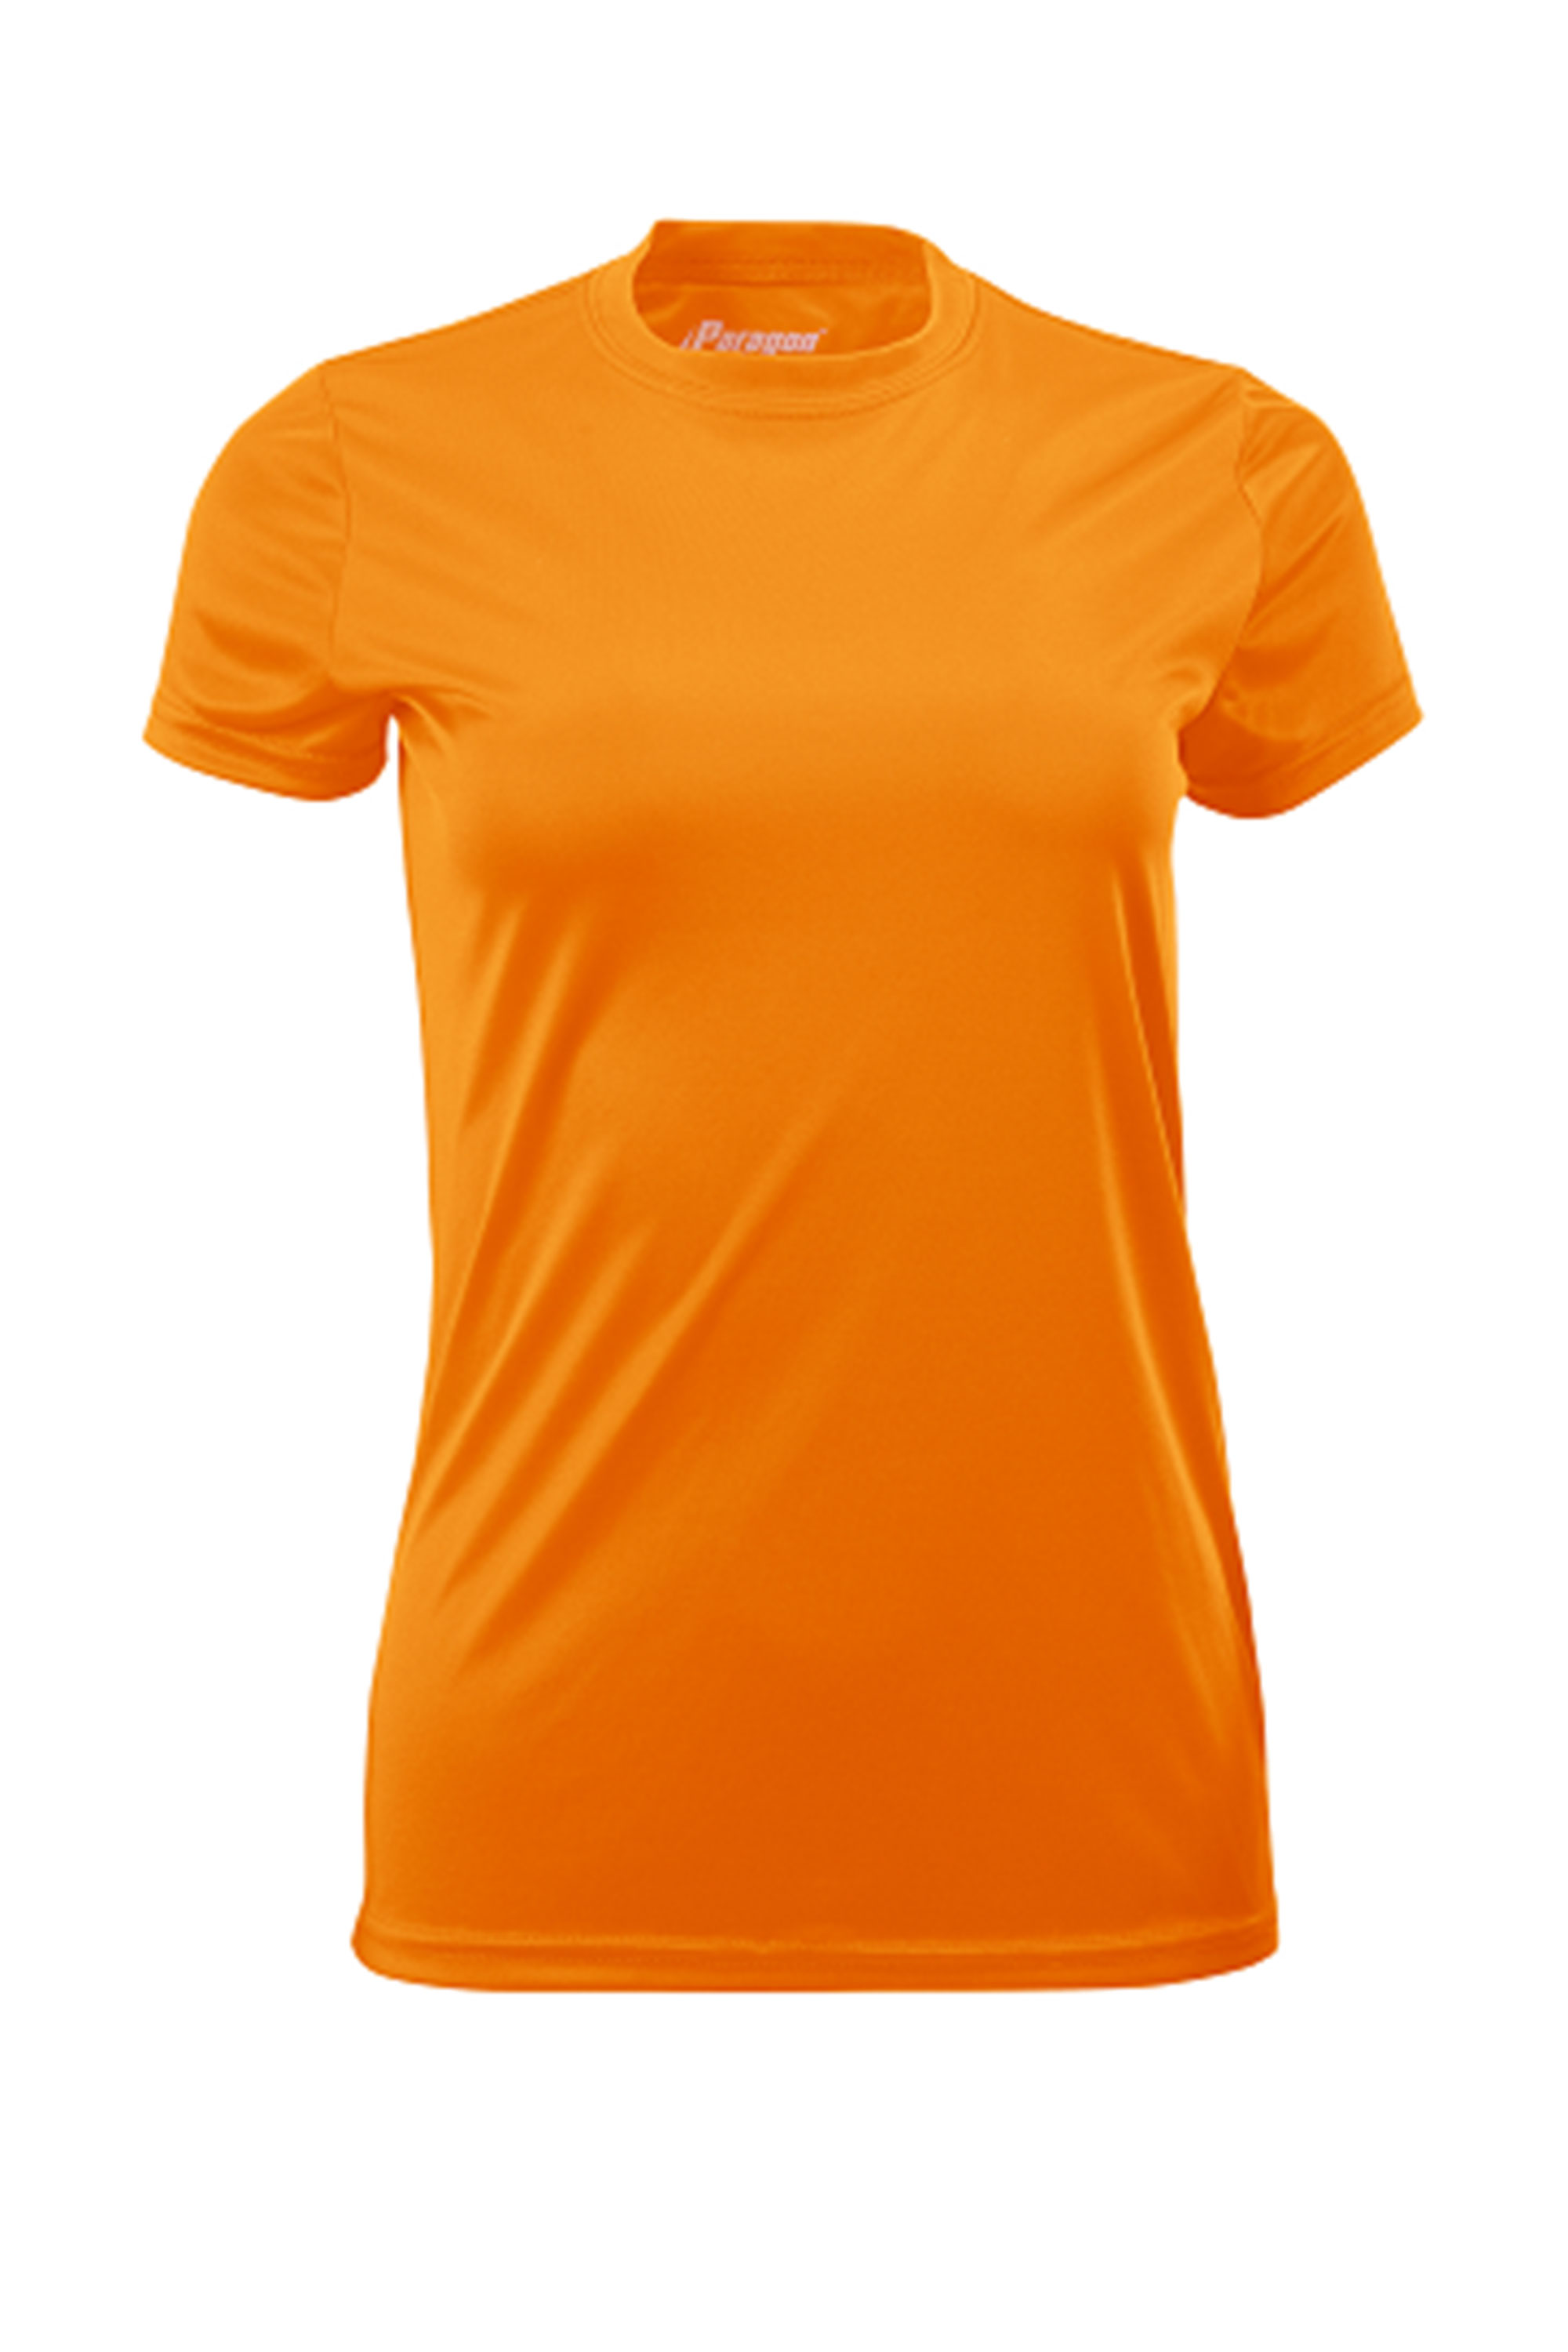 Paragon 204 - Ladies Performance T-Shirt $6.70 - T-Shirts